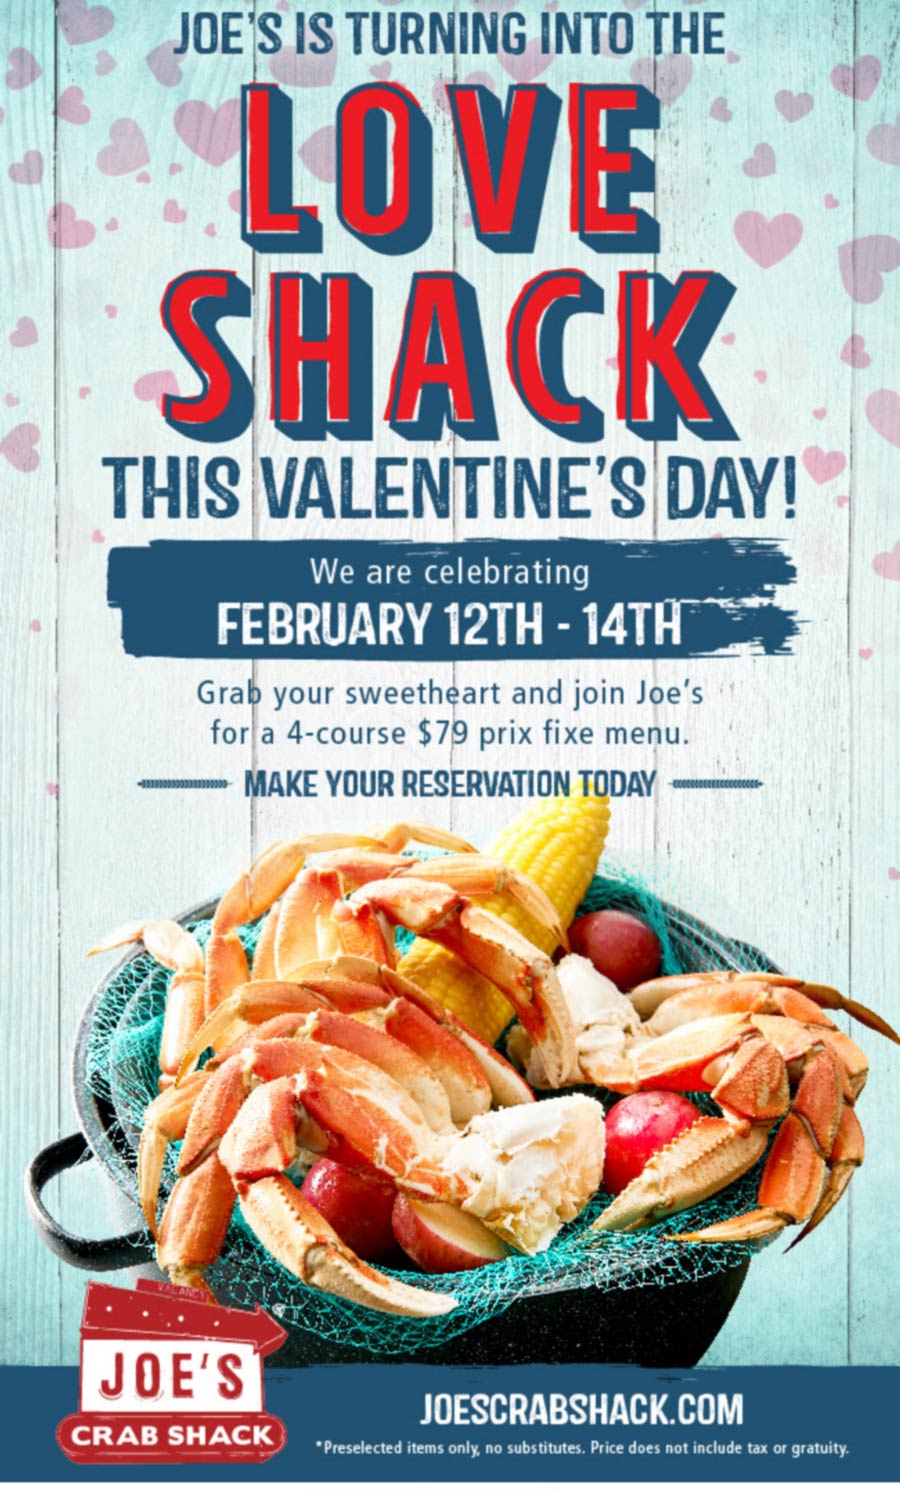 Joes Crab Shack restaurants Coupon  4-course $79 prix fixe Valentines menu at Joes Crab Shack restaurants #joescrabshack 